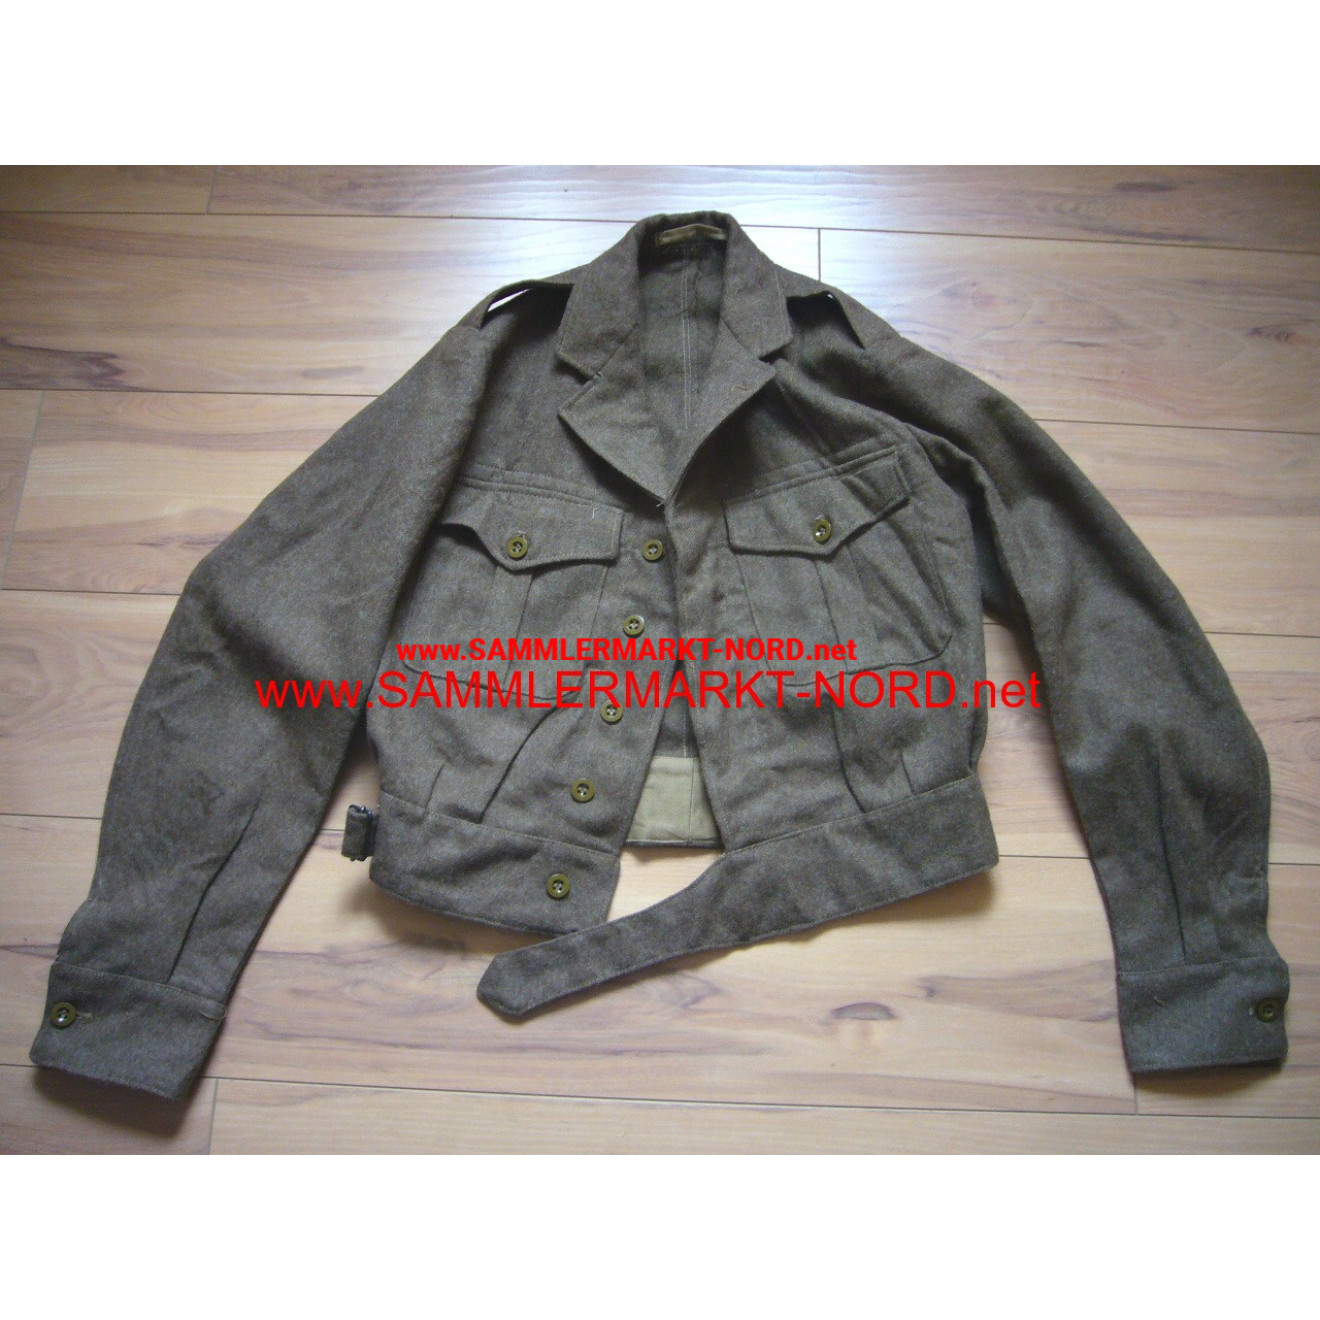 Great Britain - uniform jacket (Battledress)